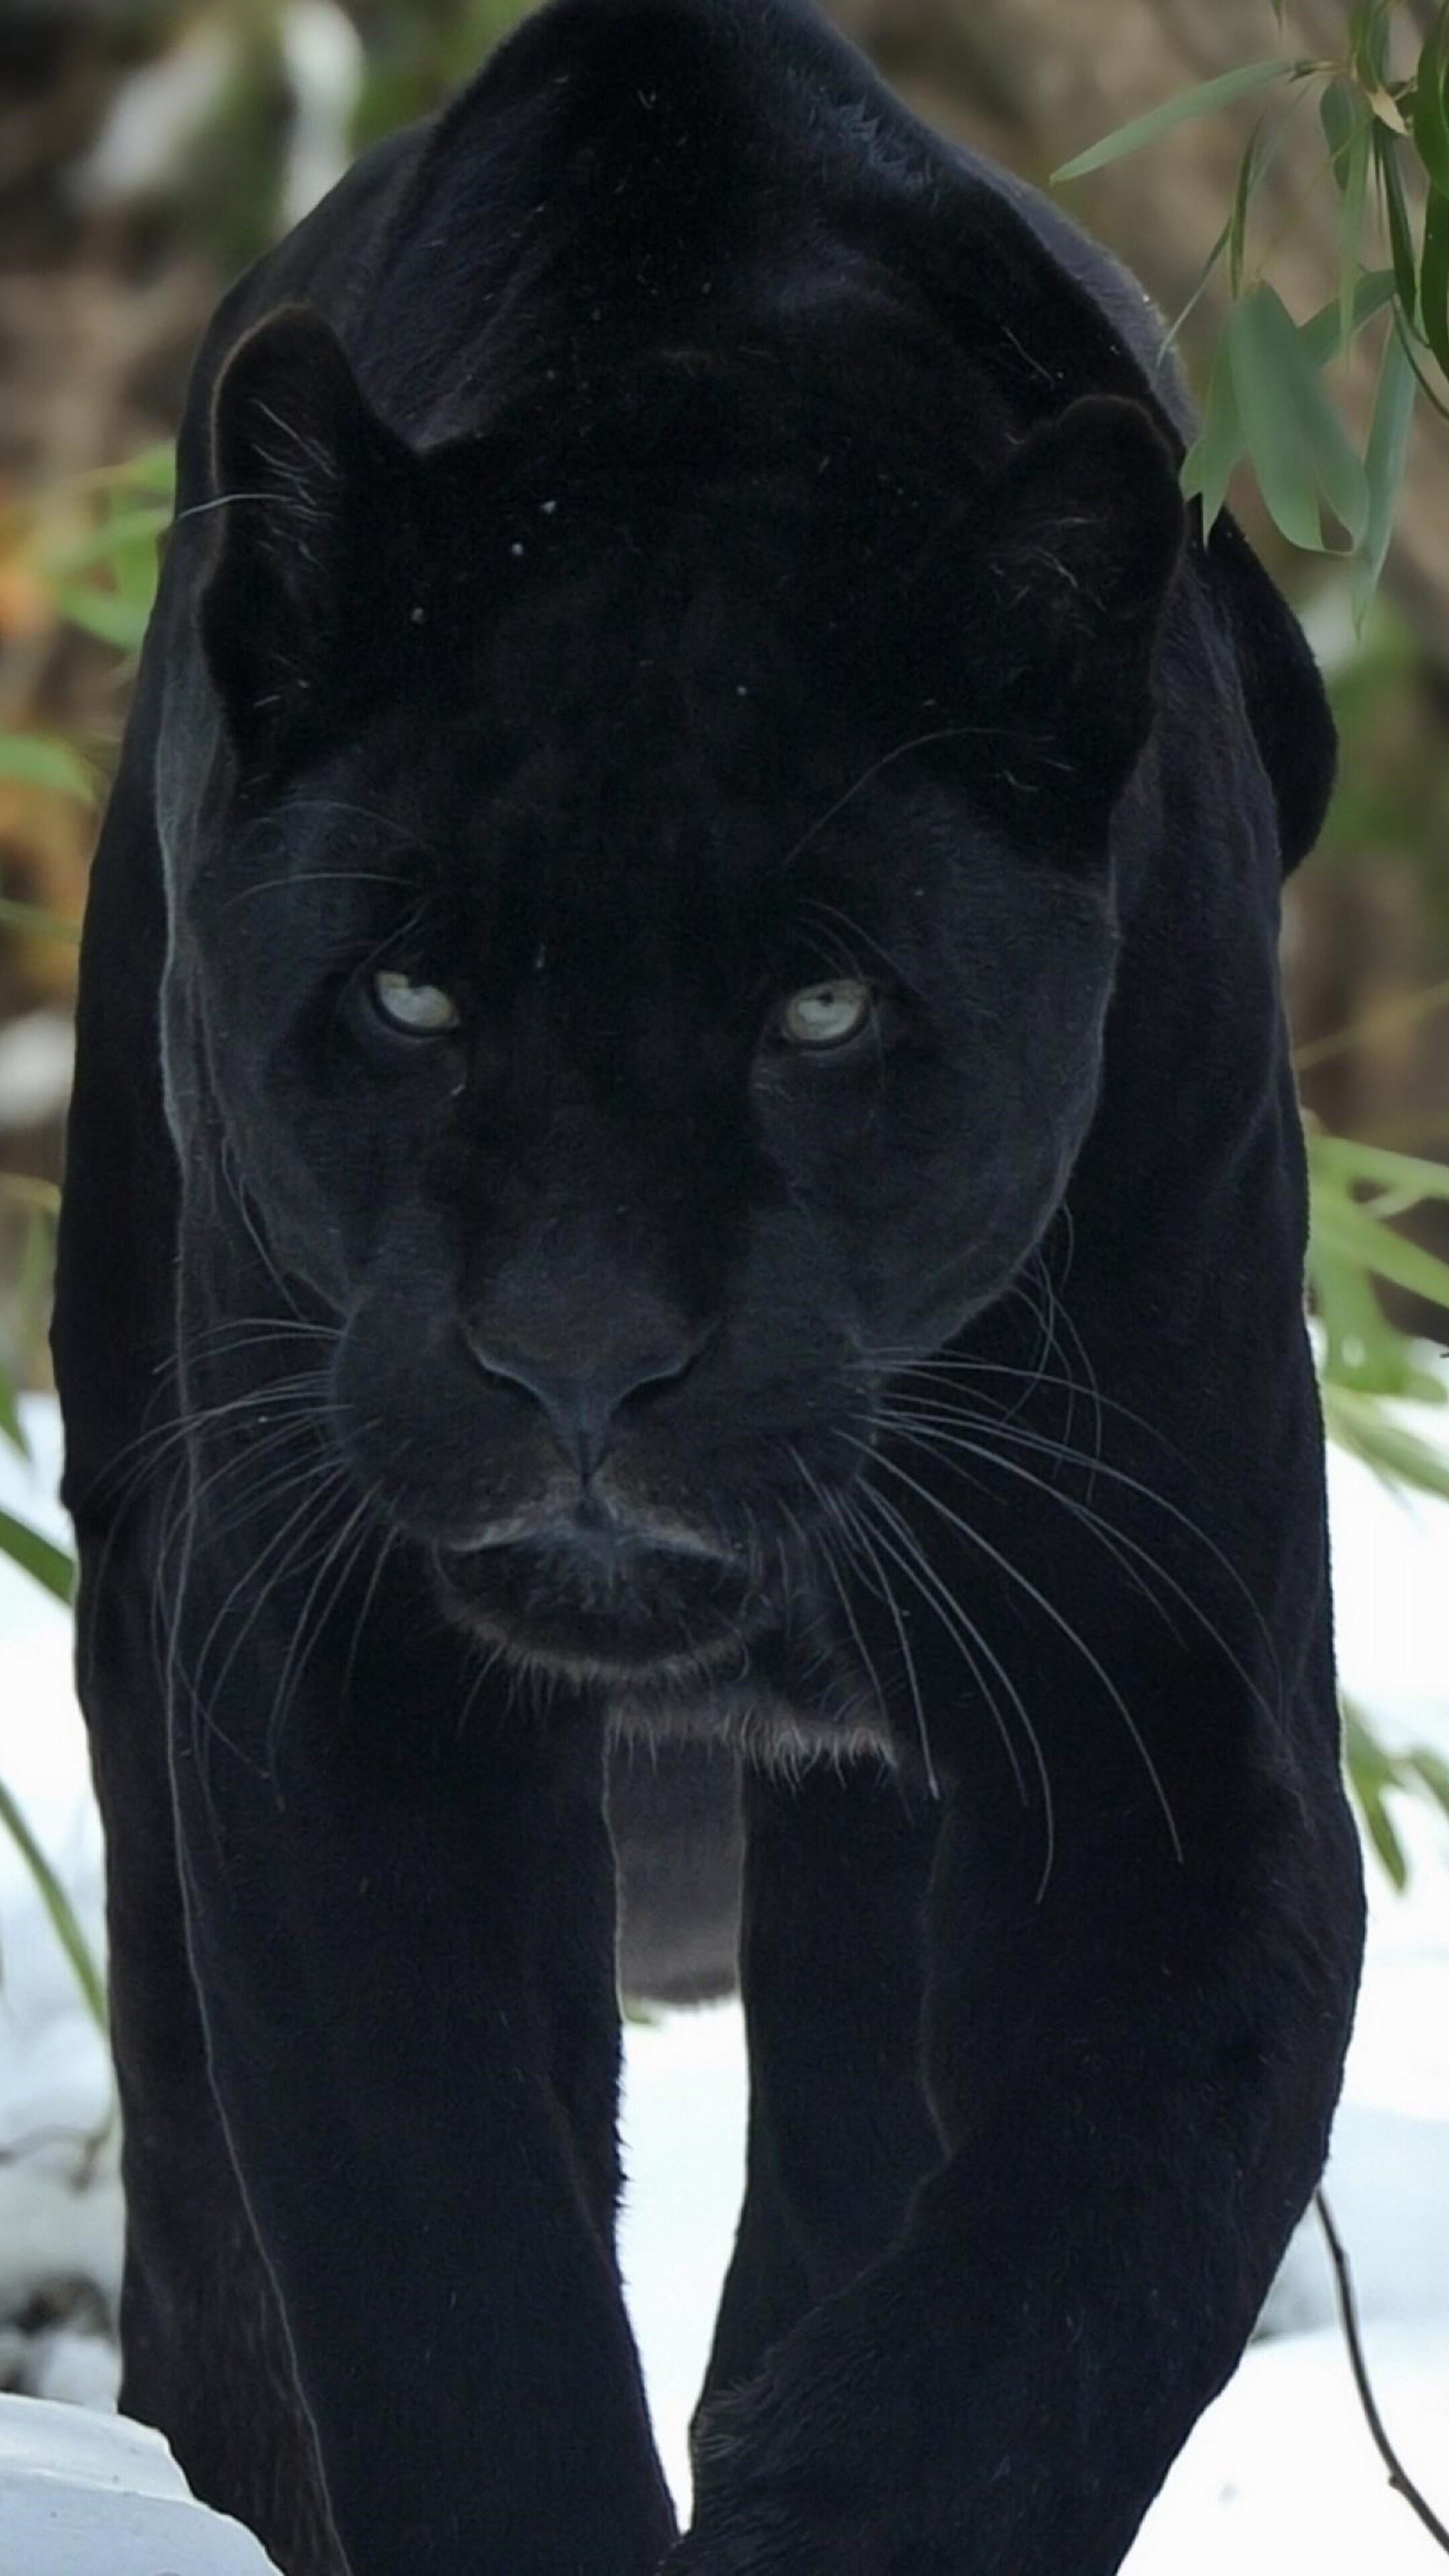 Black Panther (Animal): A black specimen of several species of cats, Leopard. 2160x3840 4K Wallpaper.